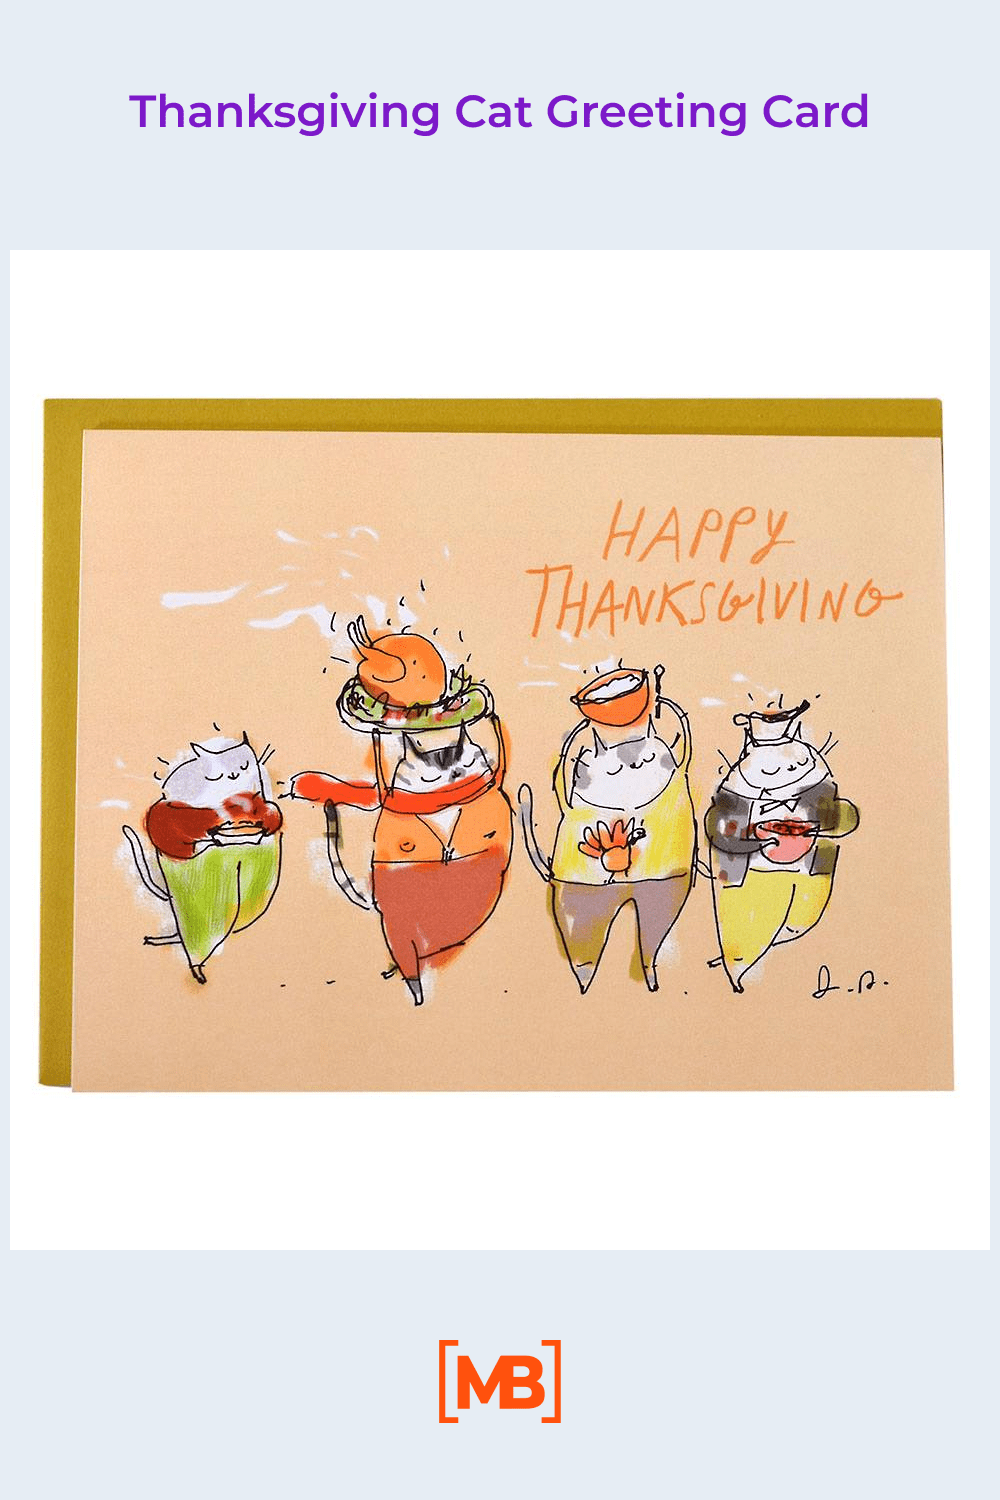 Thanksgiving cat greeting card.